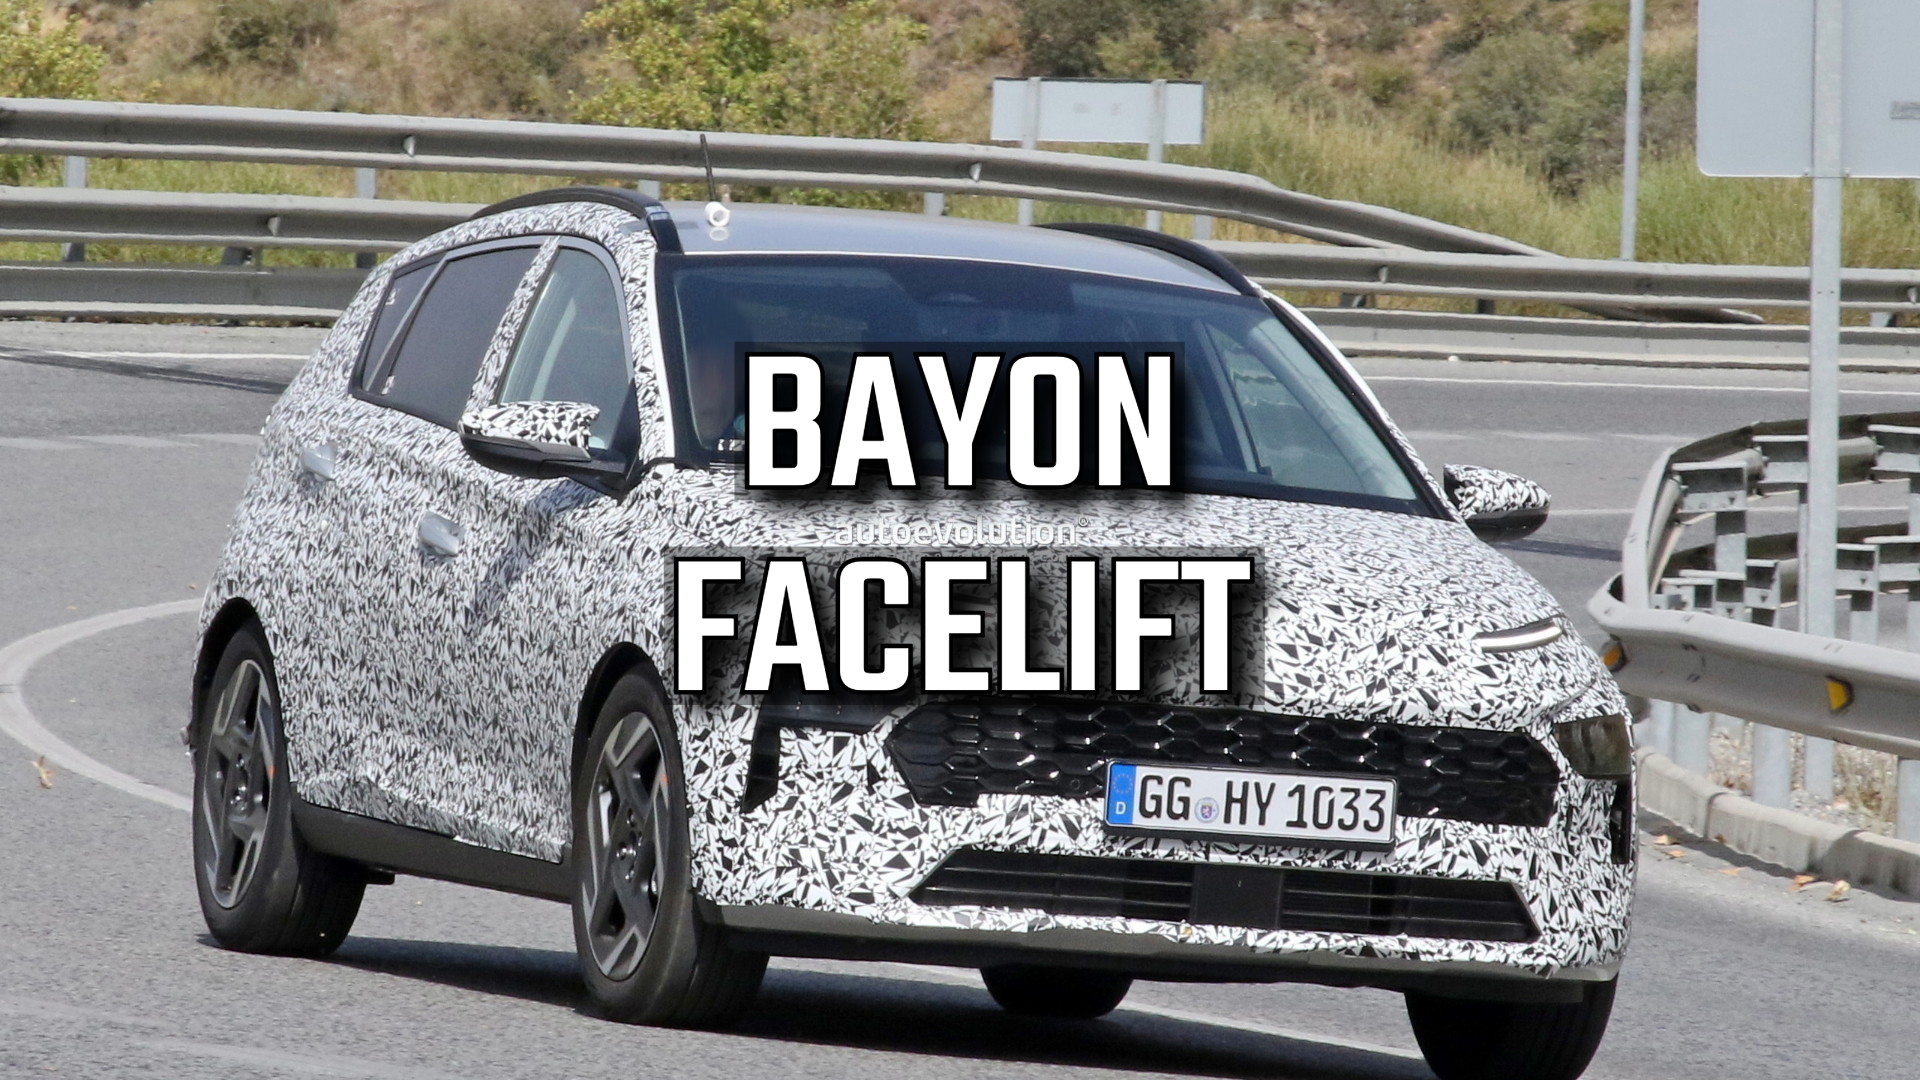 Hyundai Bayon has facelift, reminds us of its existence